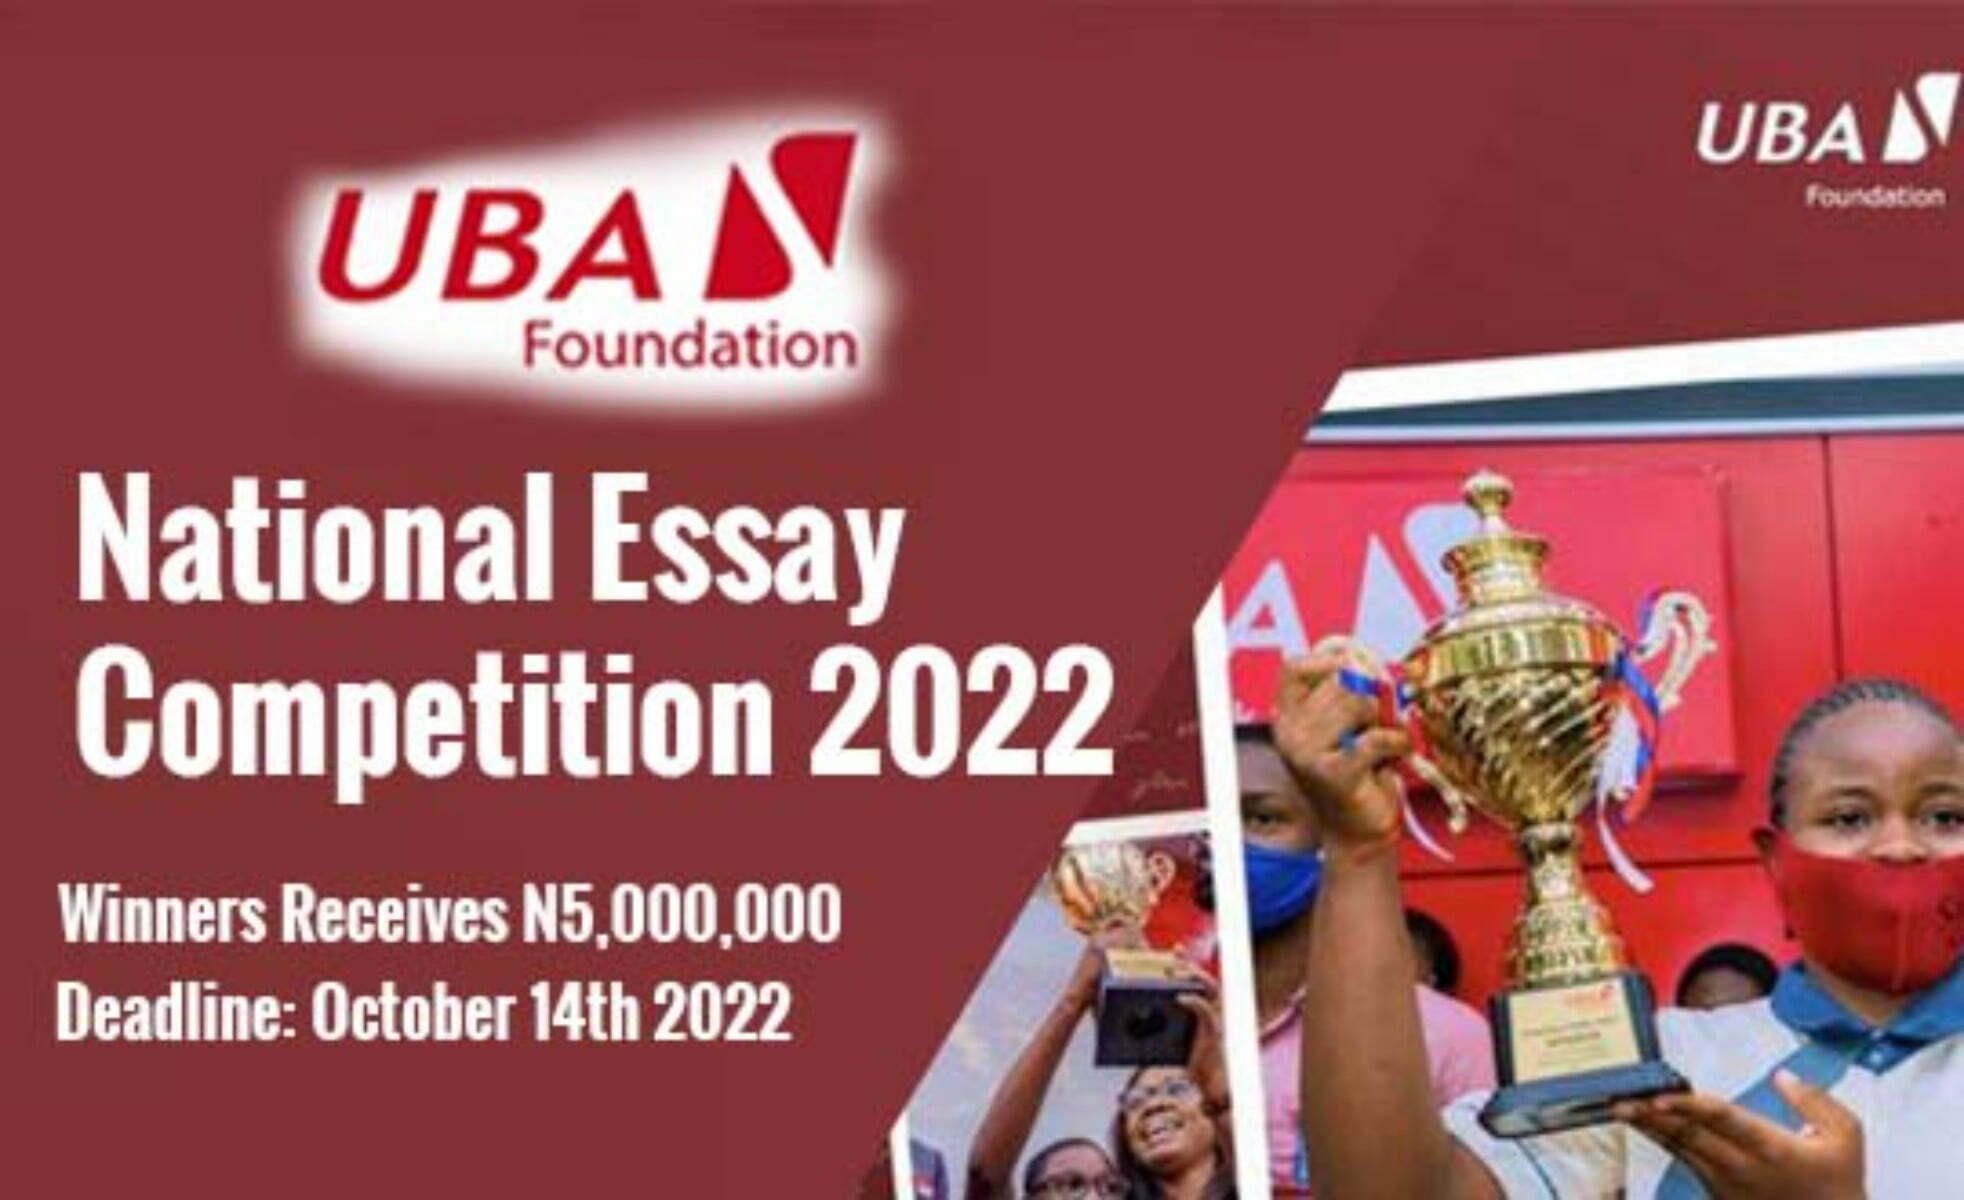 uba essay competition 2022 result